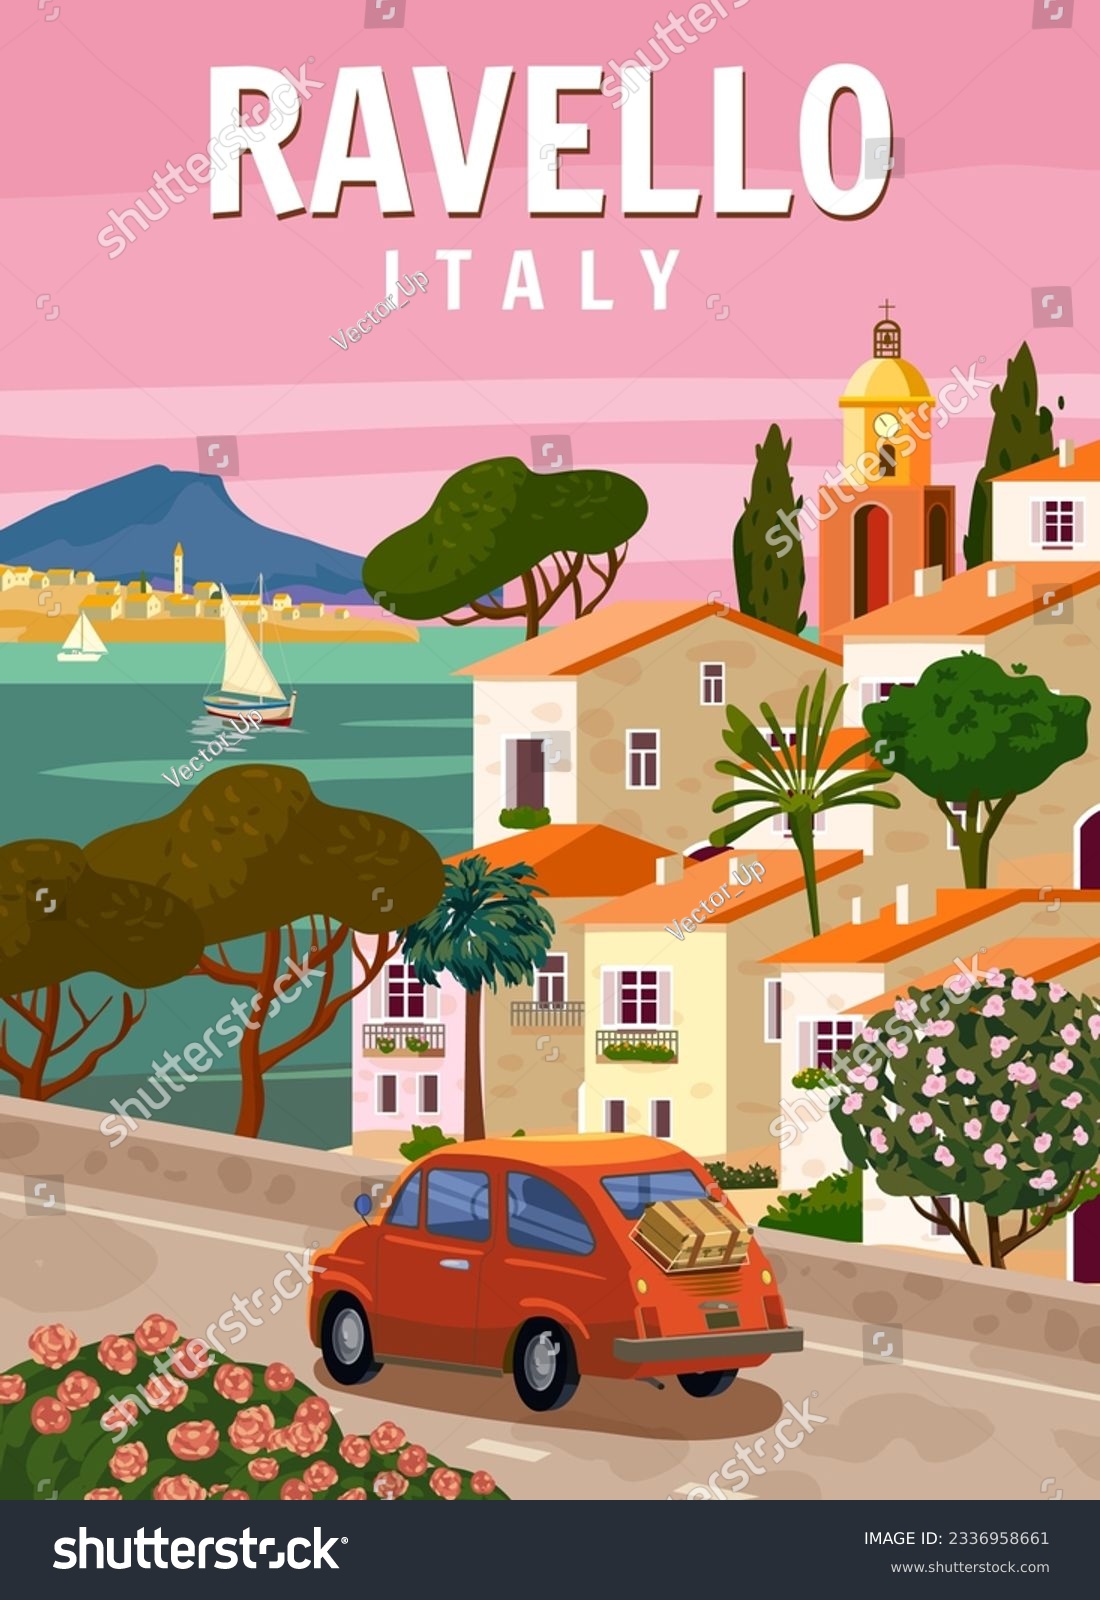 SVG of Retro Poster Italy, Ravello resort, Amalfi coast. Road retro car, mediterranean romantic landscape, mountains, seaside town, sailboat, sea. Retro travel poster svg